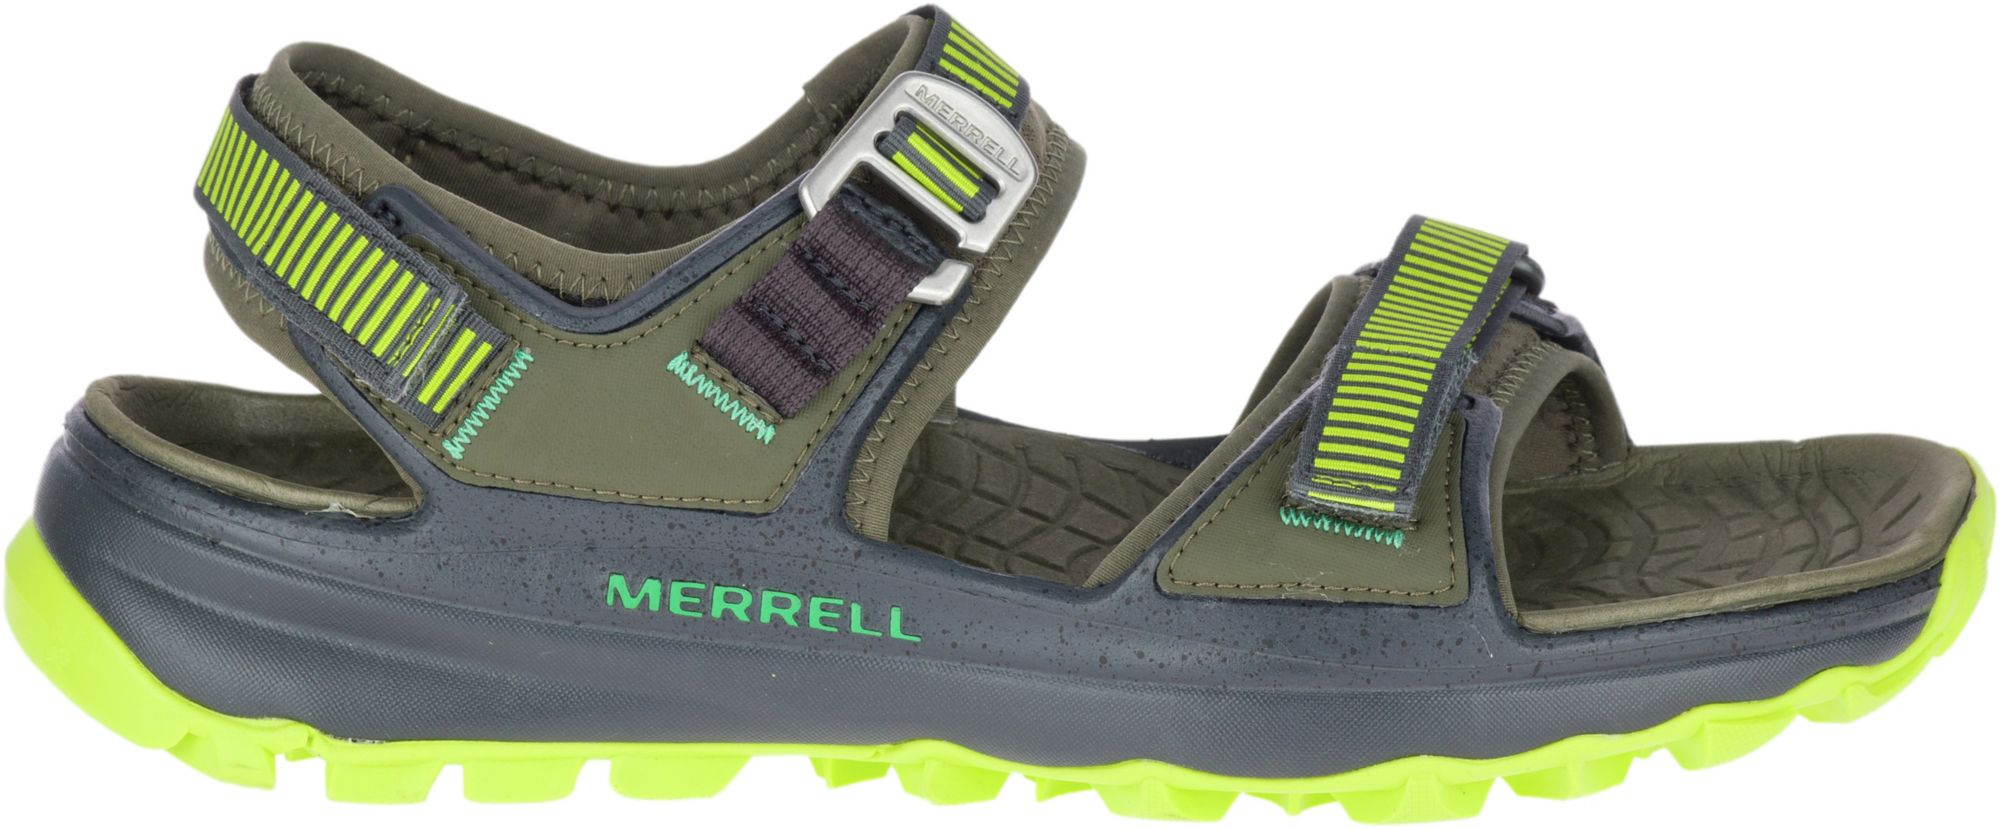 merrell hiking sandals mens